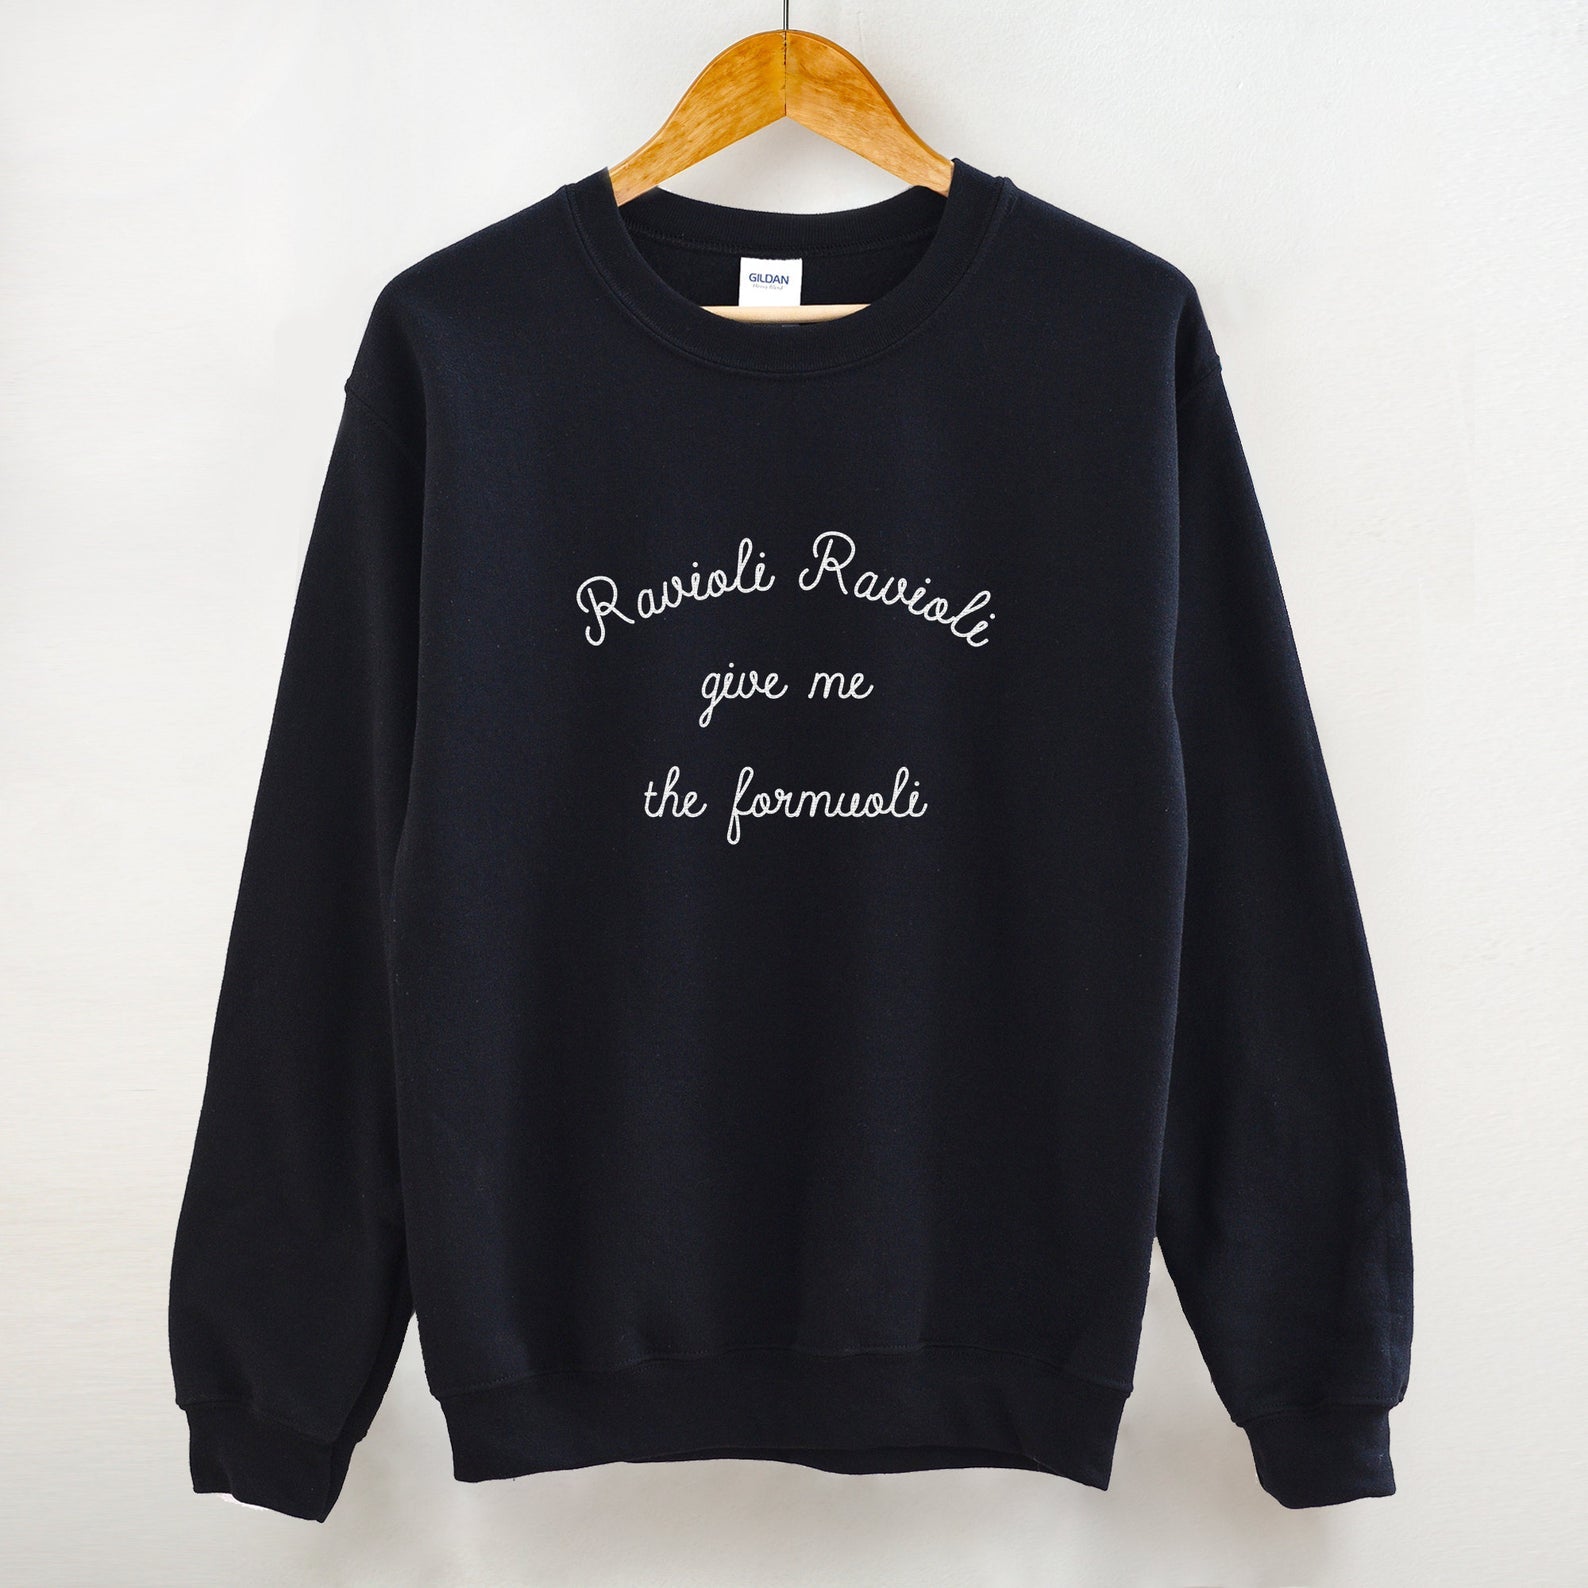 Ravioli Ravioli Give Me The Formuoli Crewneck Sweatshirt – Silk & Ivy